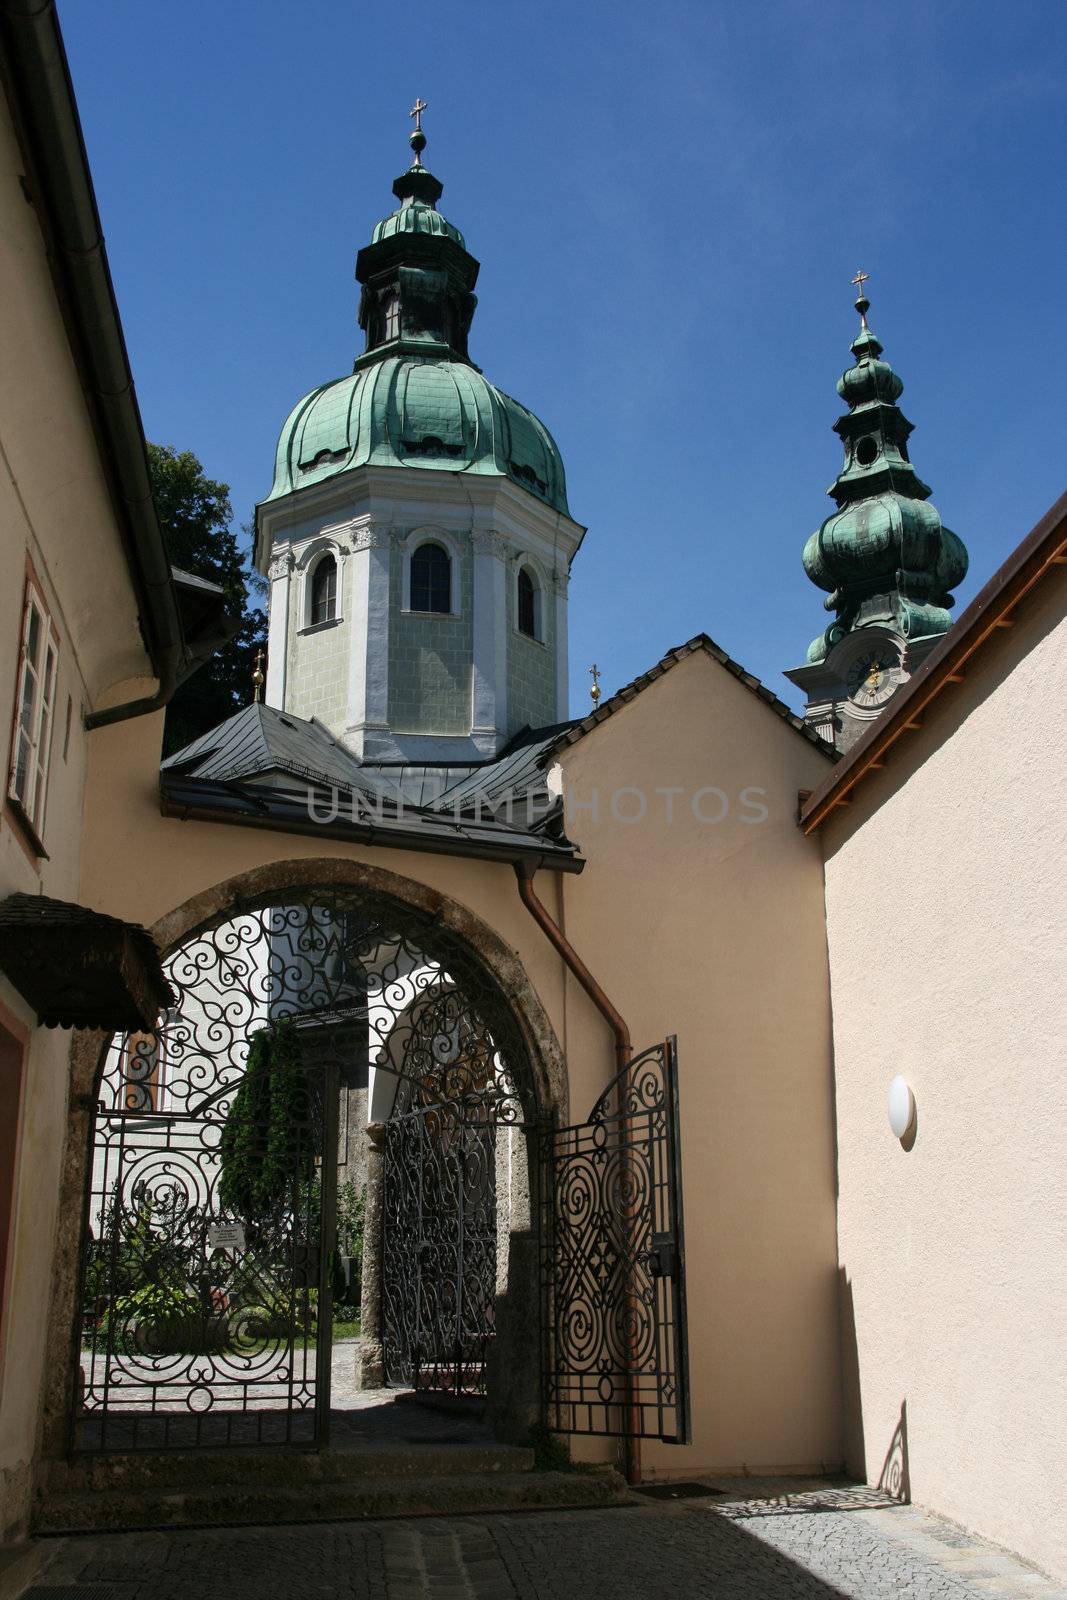 Old Salzburg by tupungato